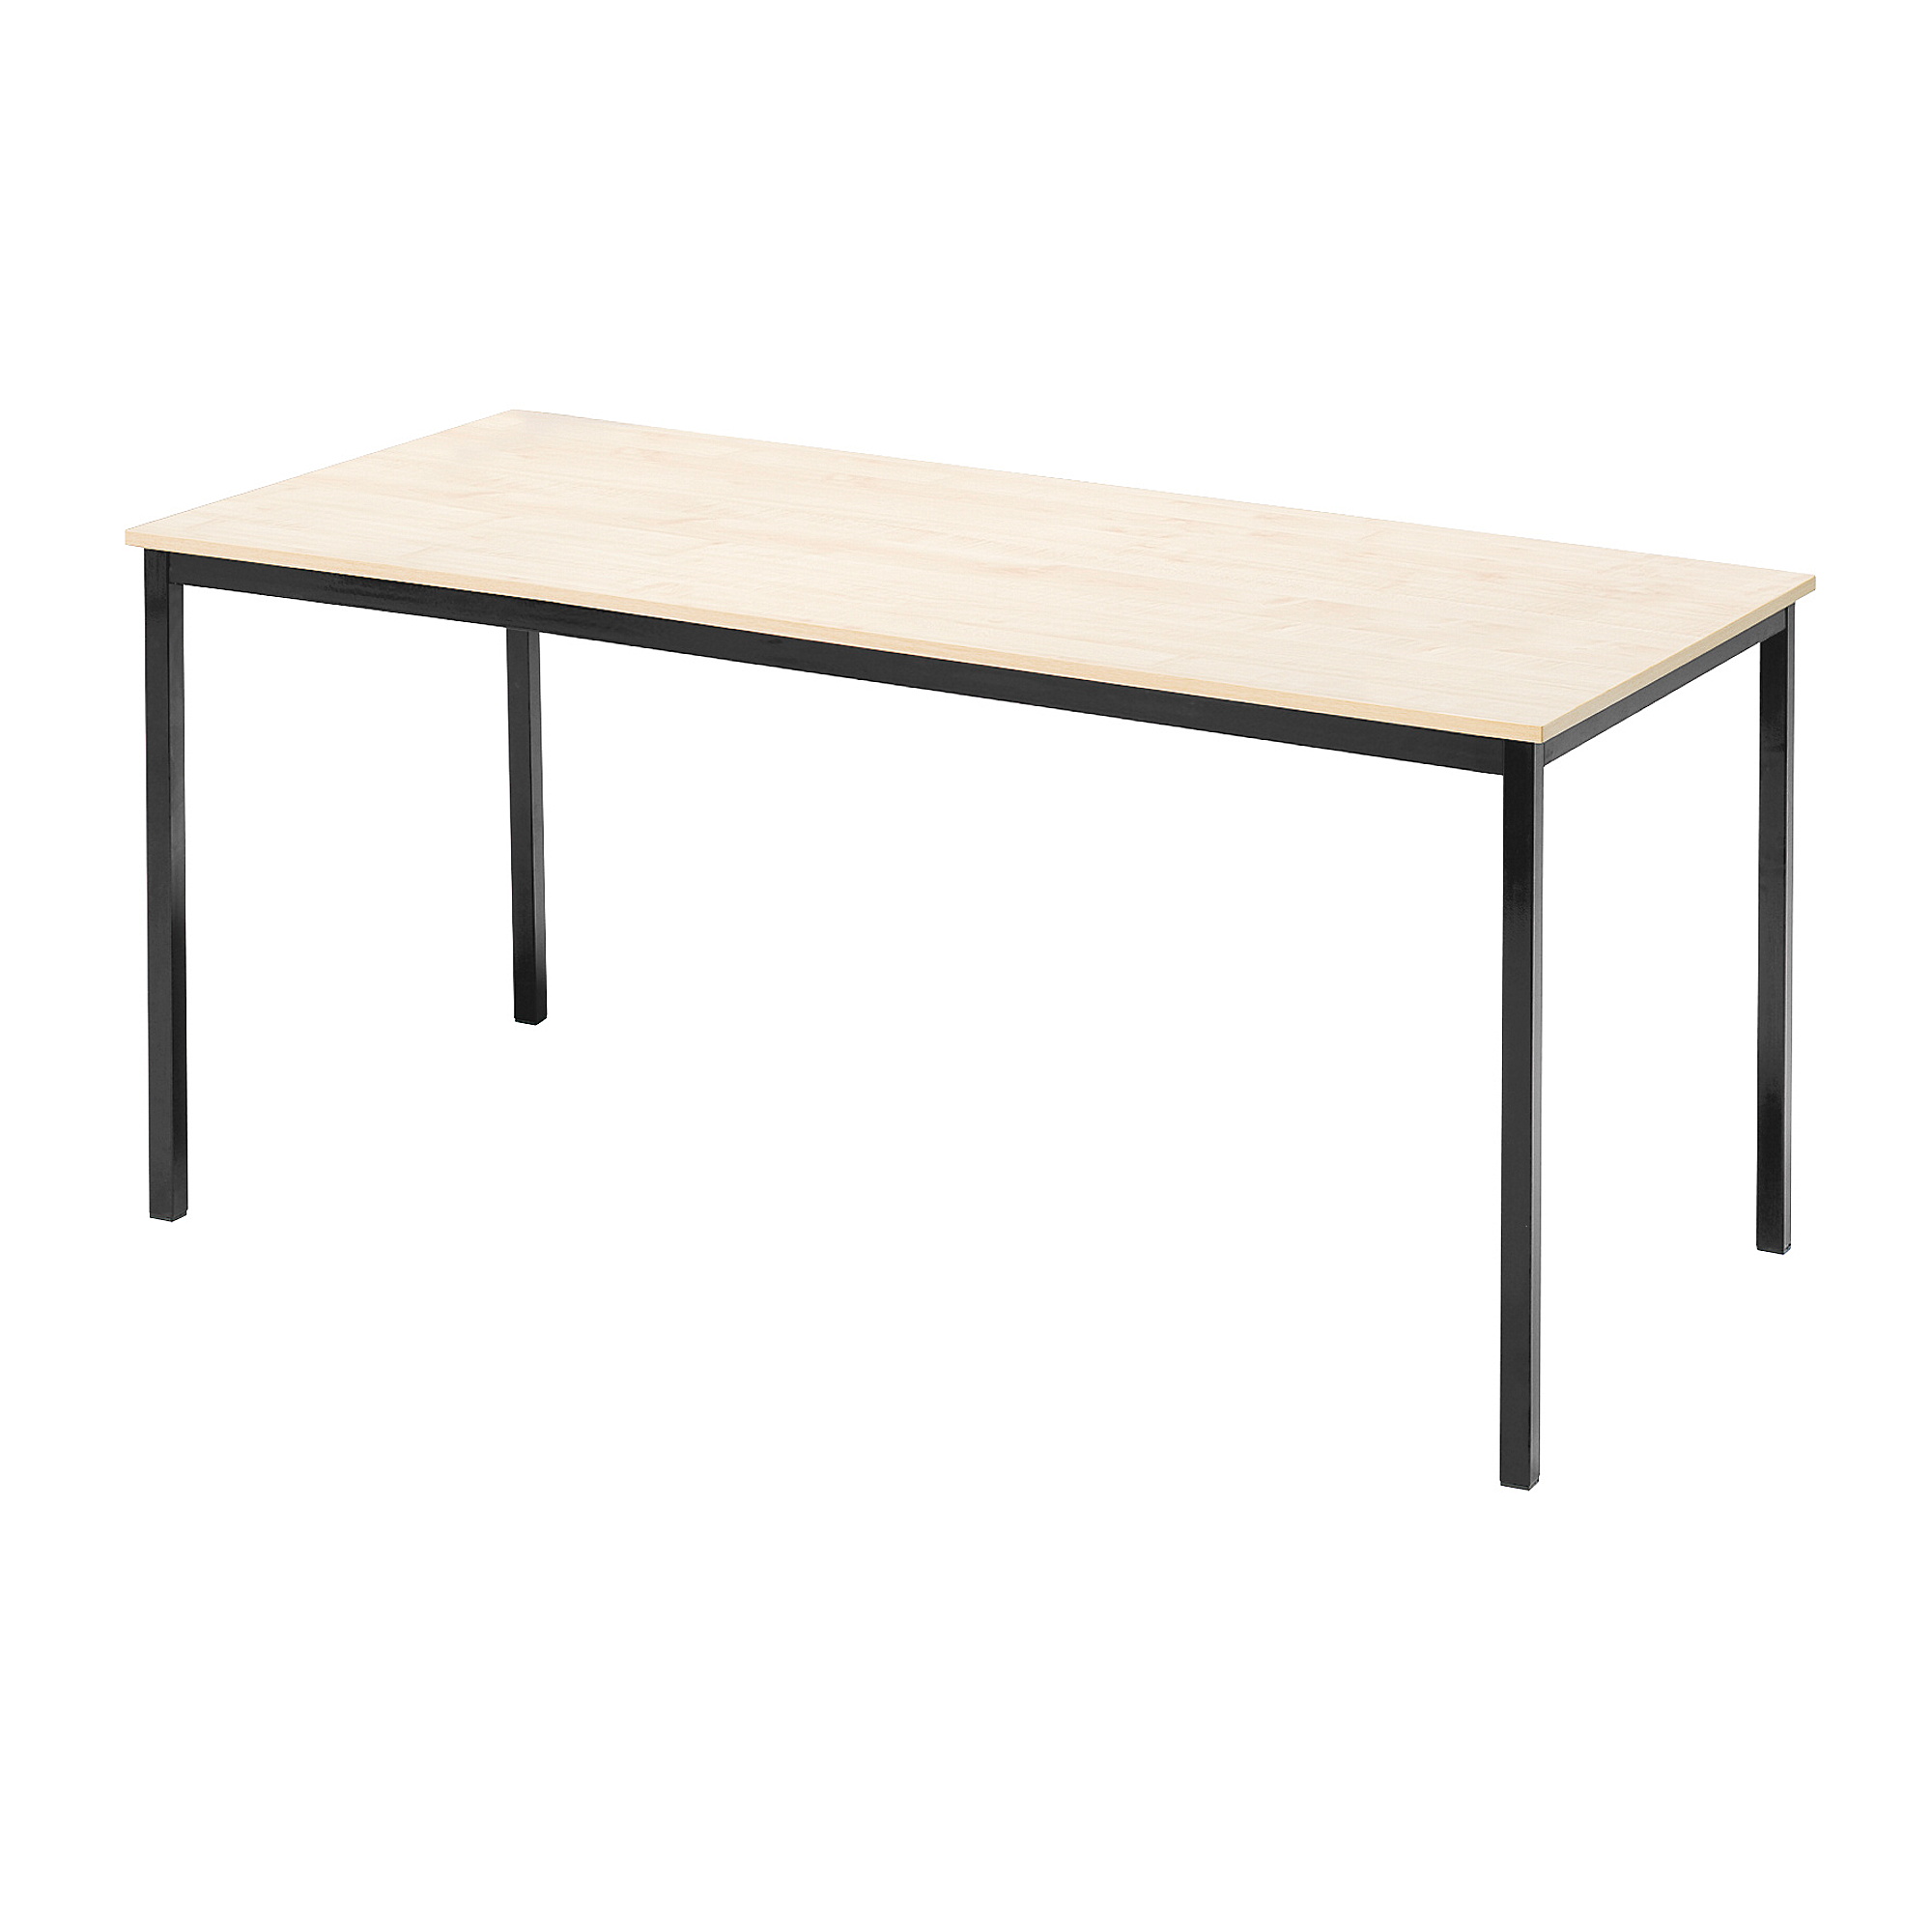 E-shop Jedálenský stôl JAMIE, 1800x800 mm, brezový laminát, čierna podnož